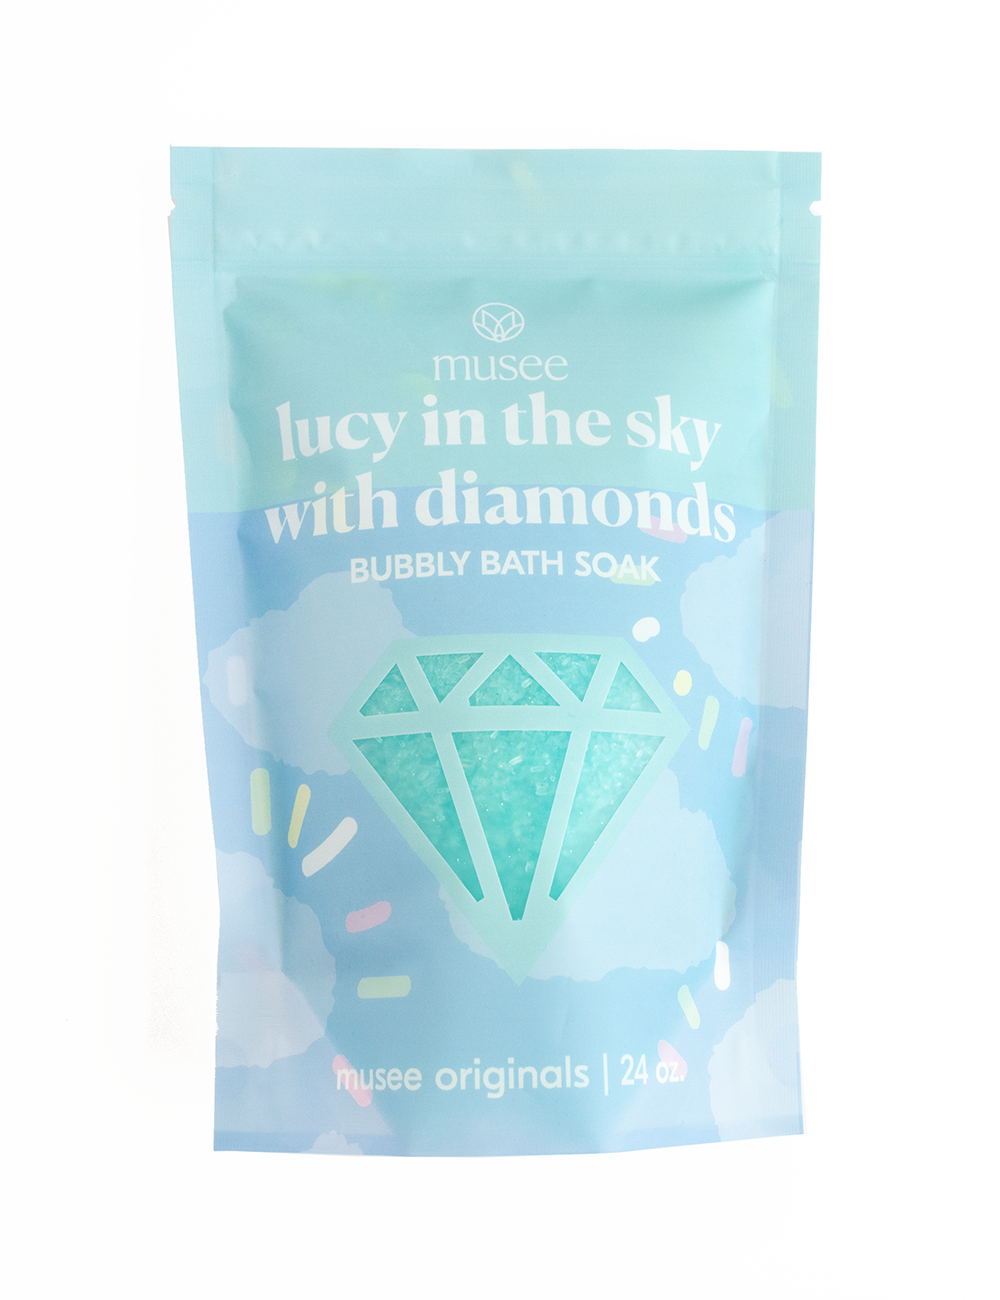 Bubbly Bath Soak: Lucy in the Sky with Diamonds